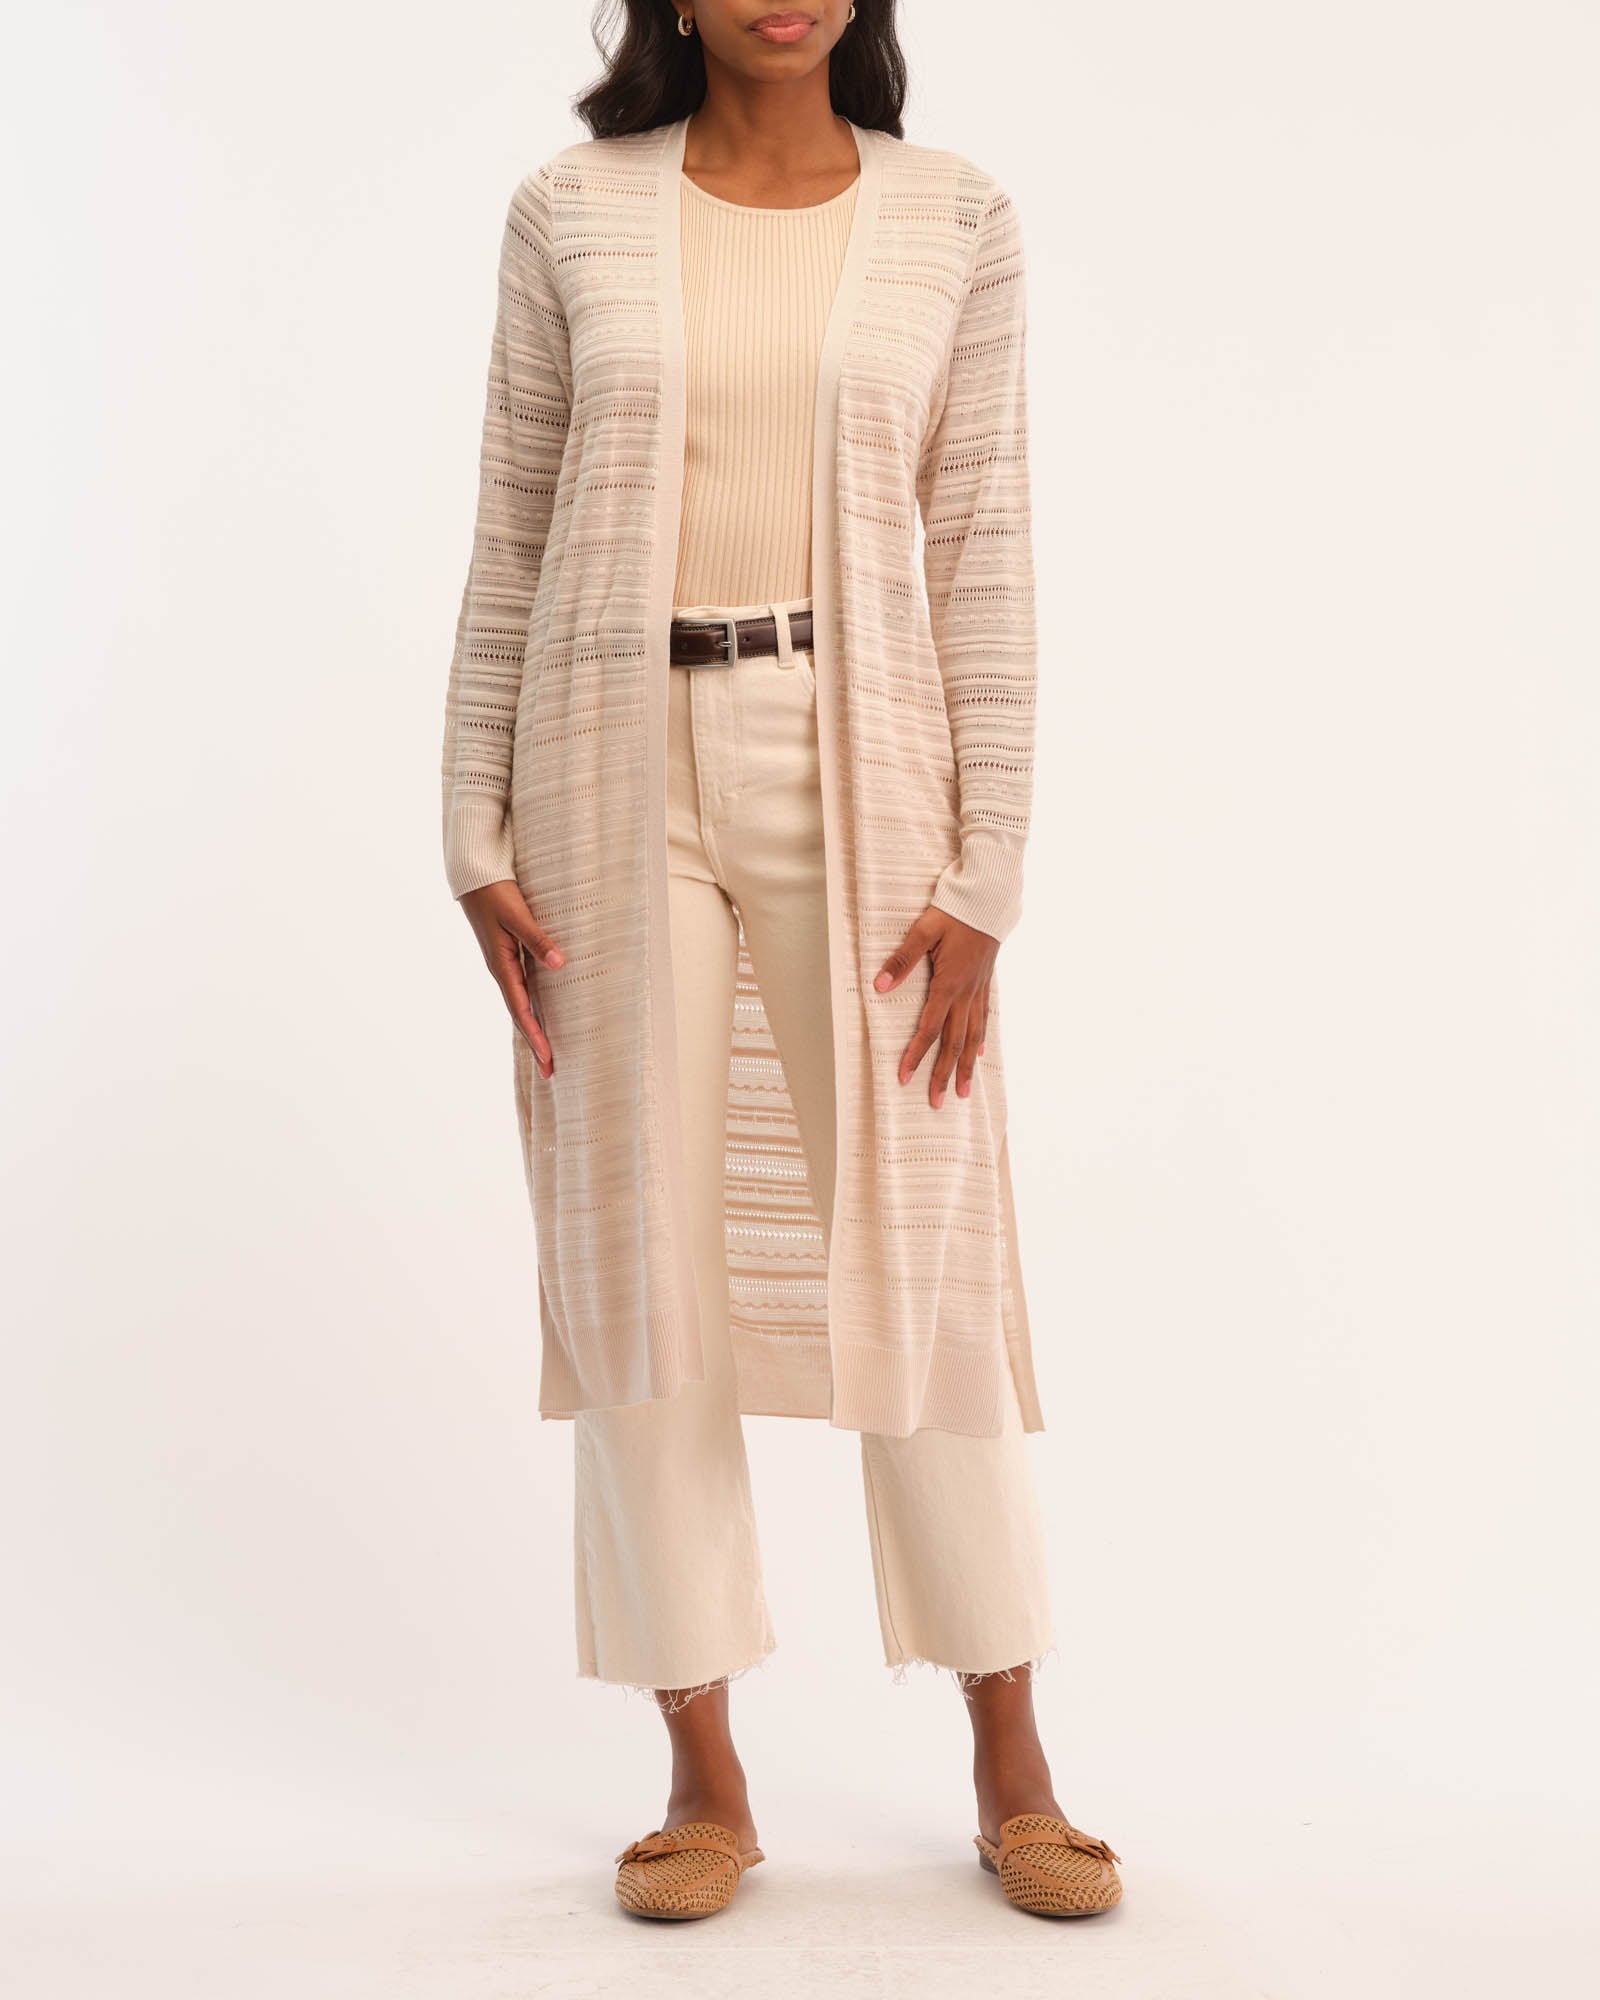 Shop Elie Elie Tahari Women's Pointelle Texture Stitch Long Cardigan | JANE + MERCER